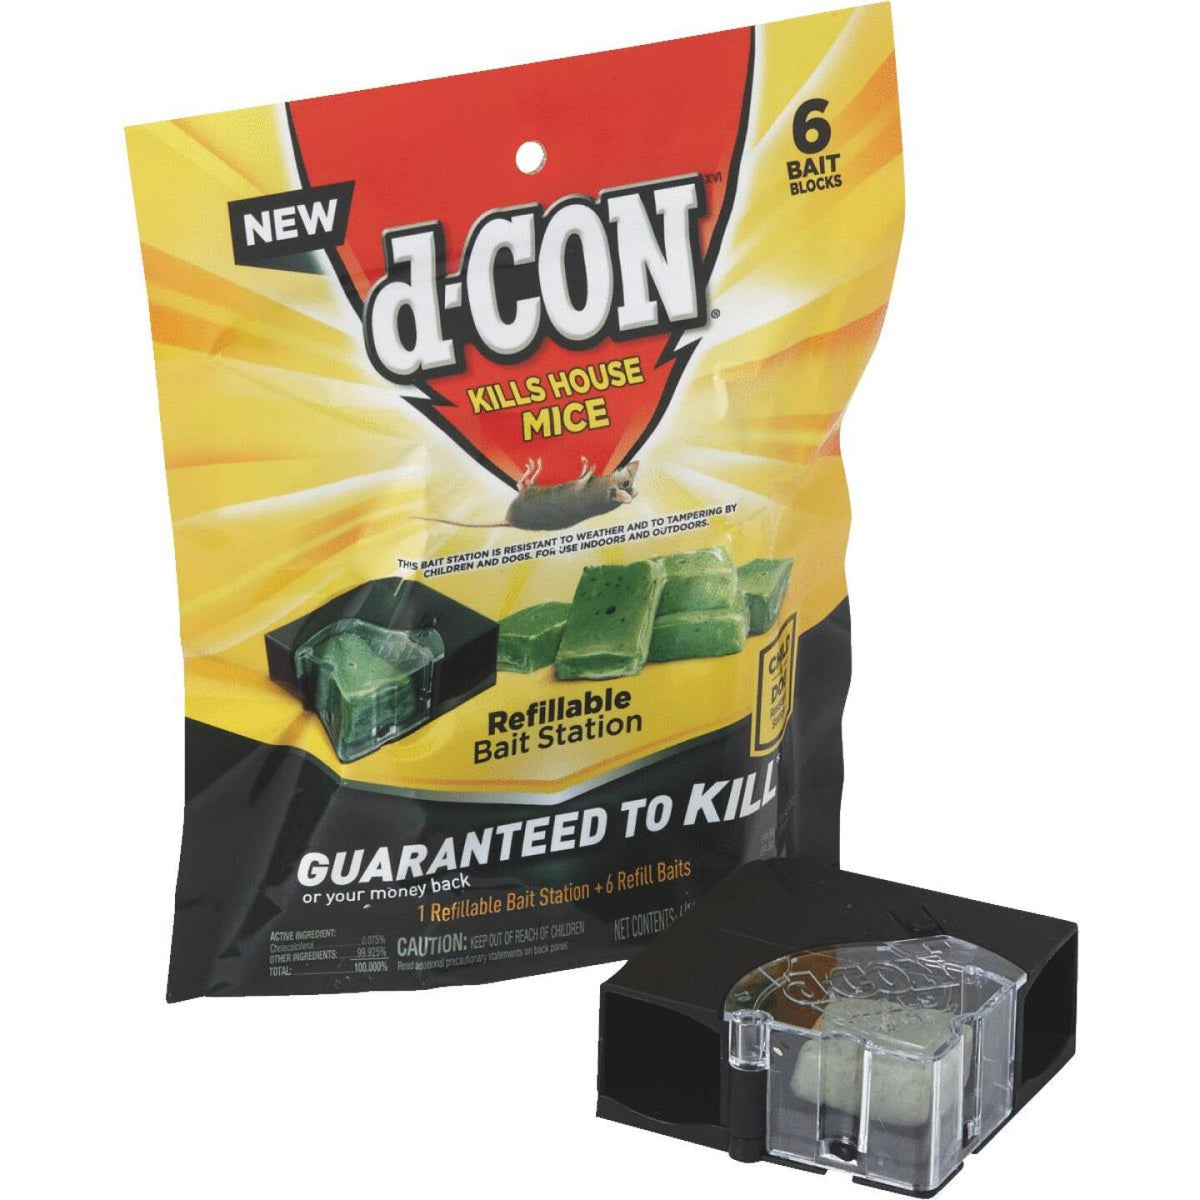 D Con® Refillable Bait Station Mouse Trap Kit 4 Ct Box, Home & Garden